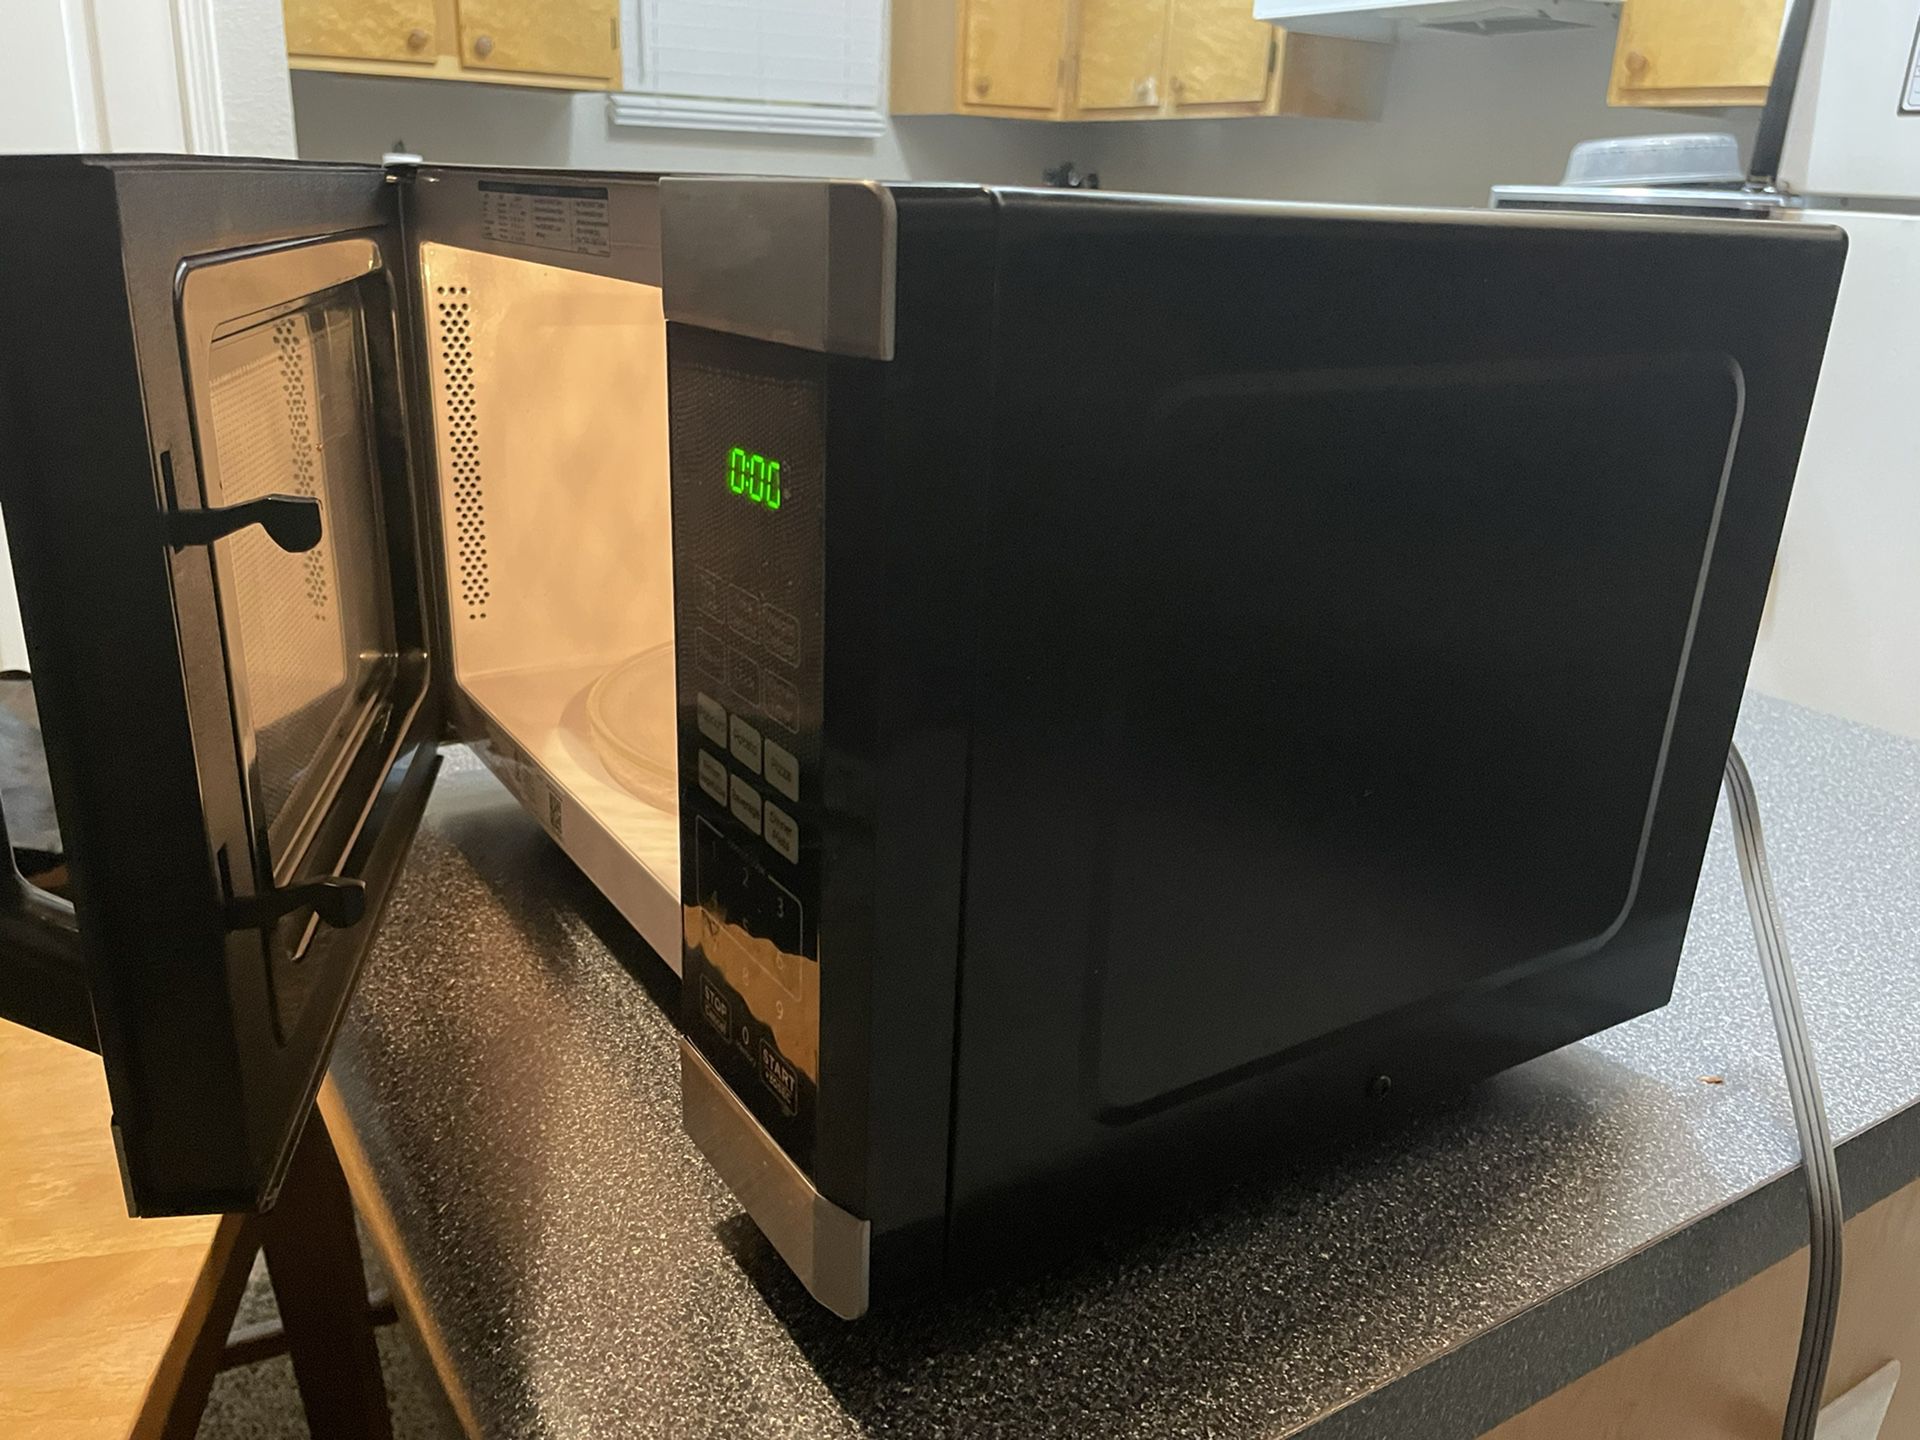 ‎ 🍏 BLACK+DECKER 0.9 cu ft 900W Microwave Oven - Open Box 🆕